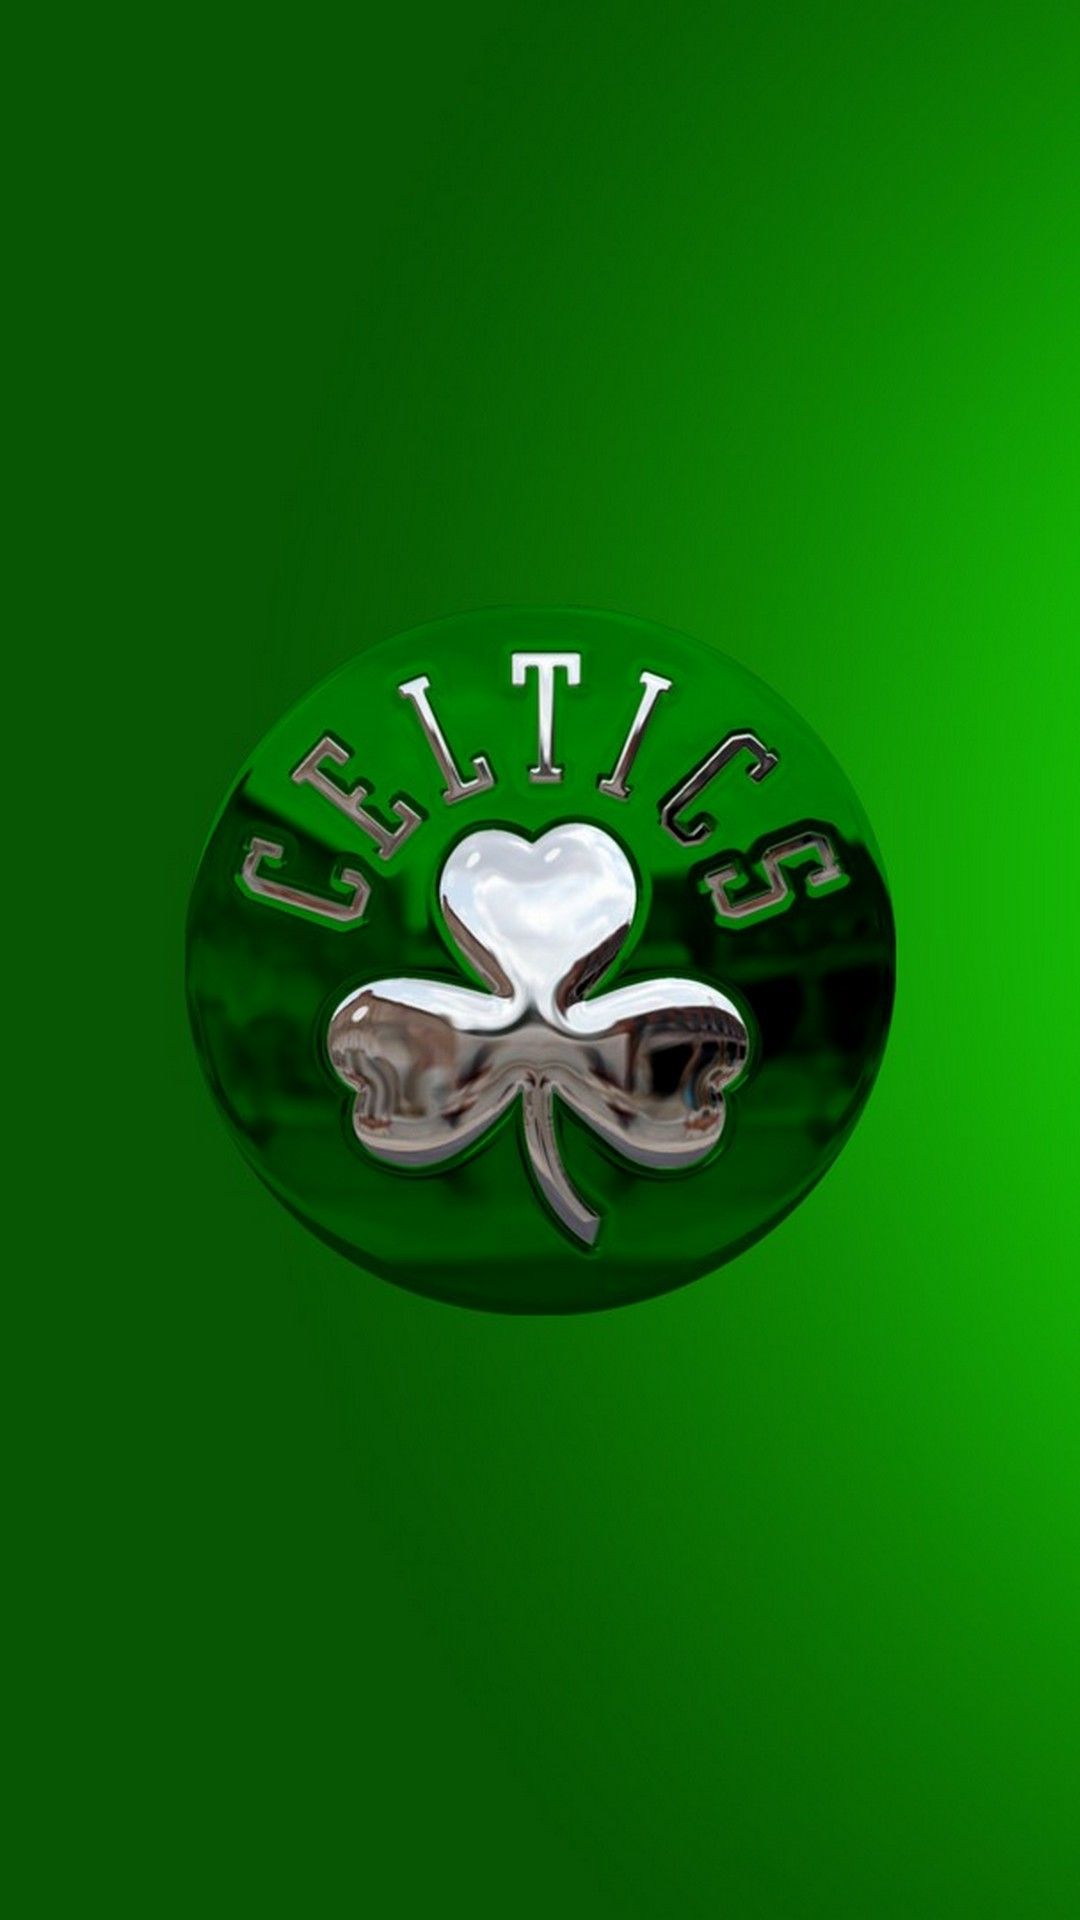 Boston Celtics iPhone Wallpaper  Boston celtics Boston celtics wallpaper  Sports wallpapers